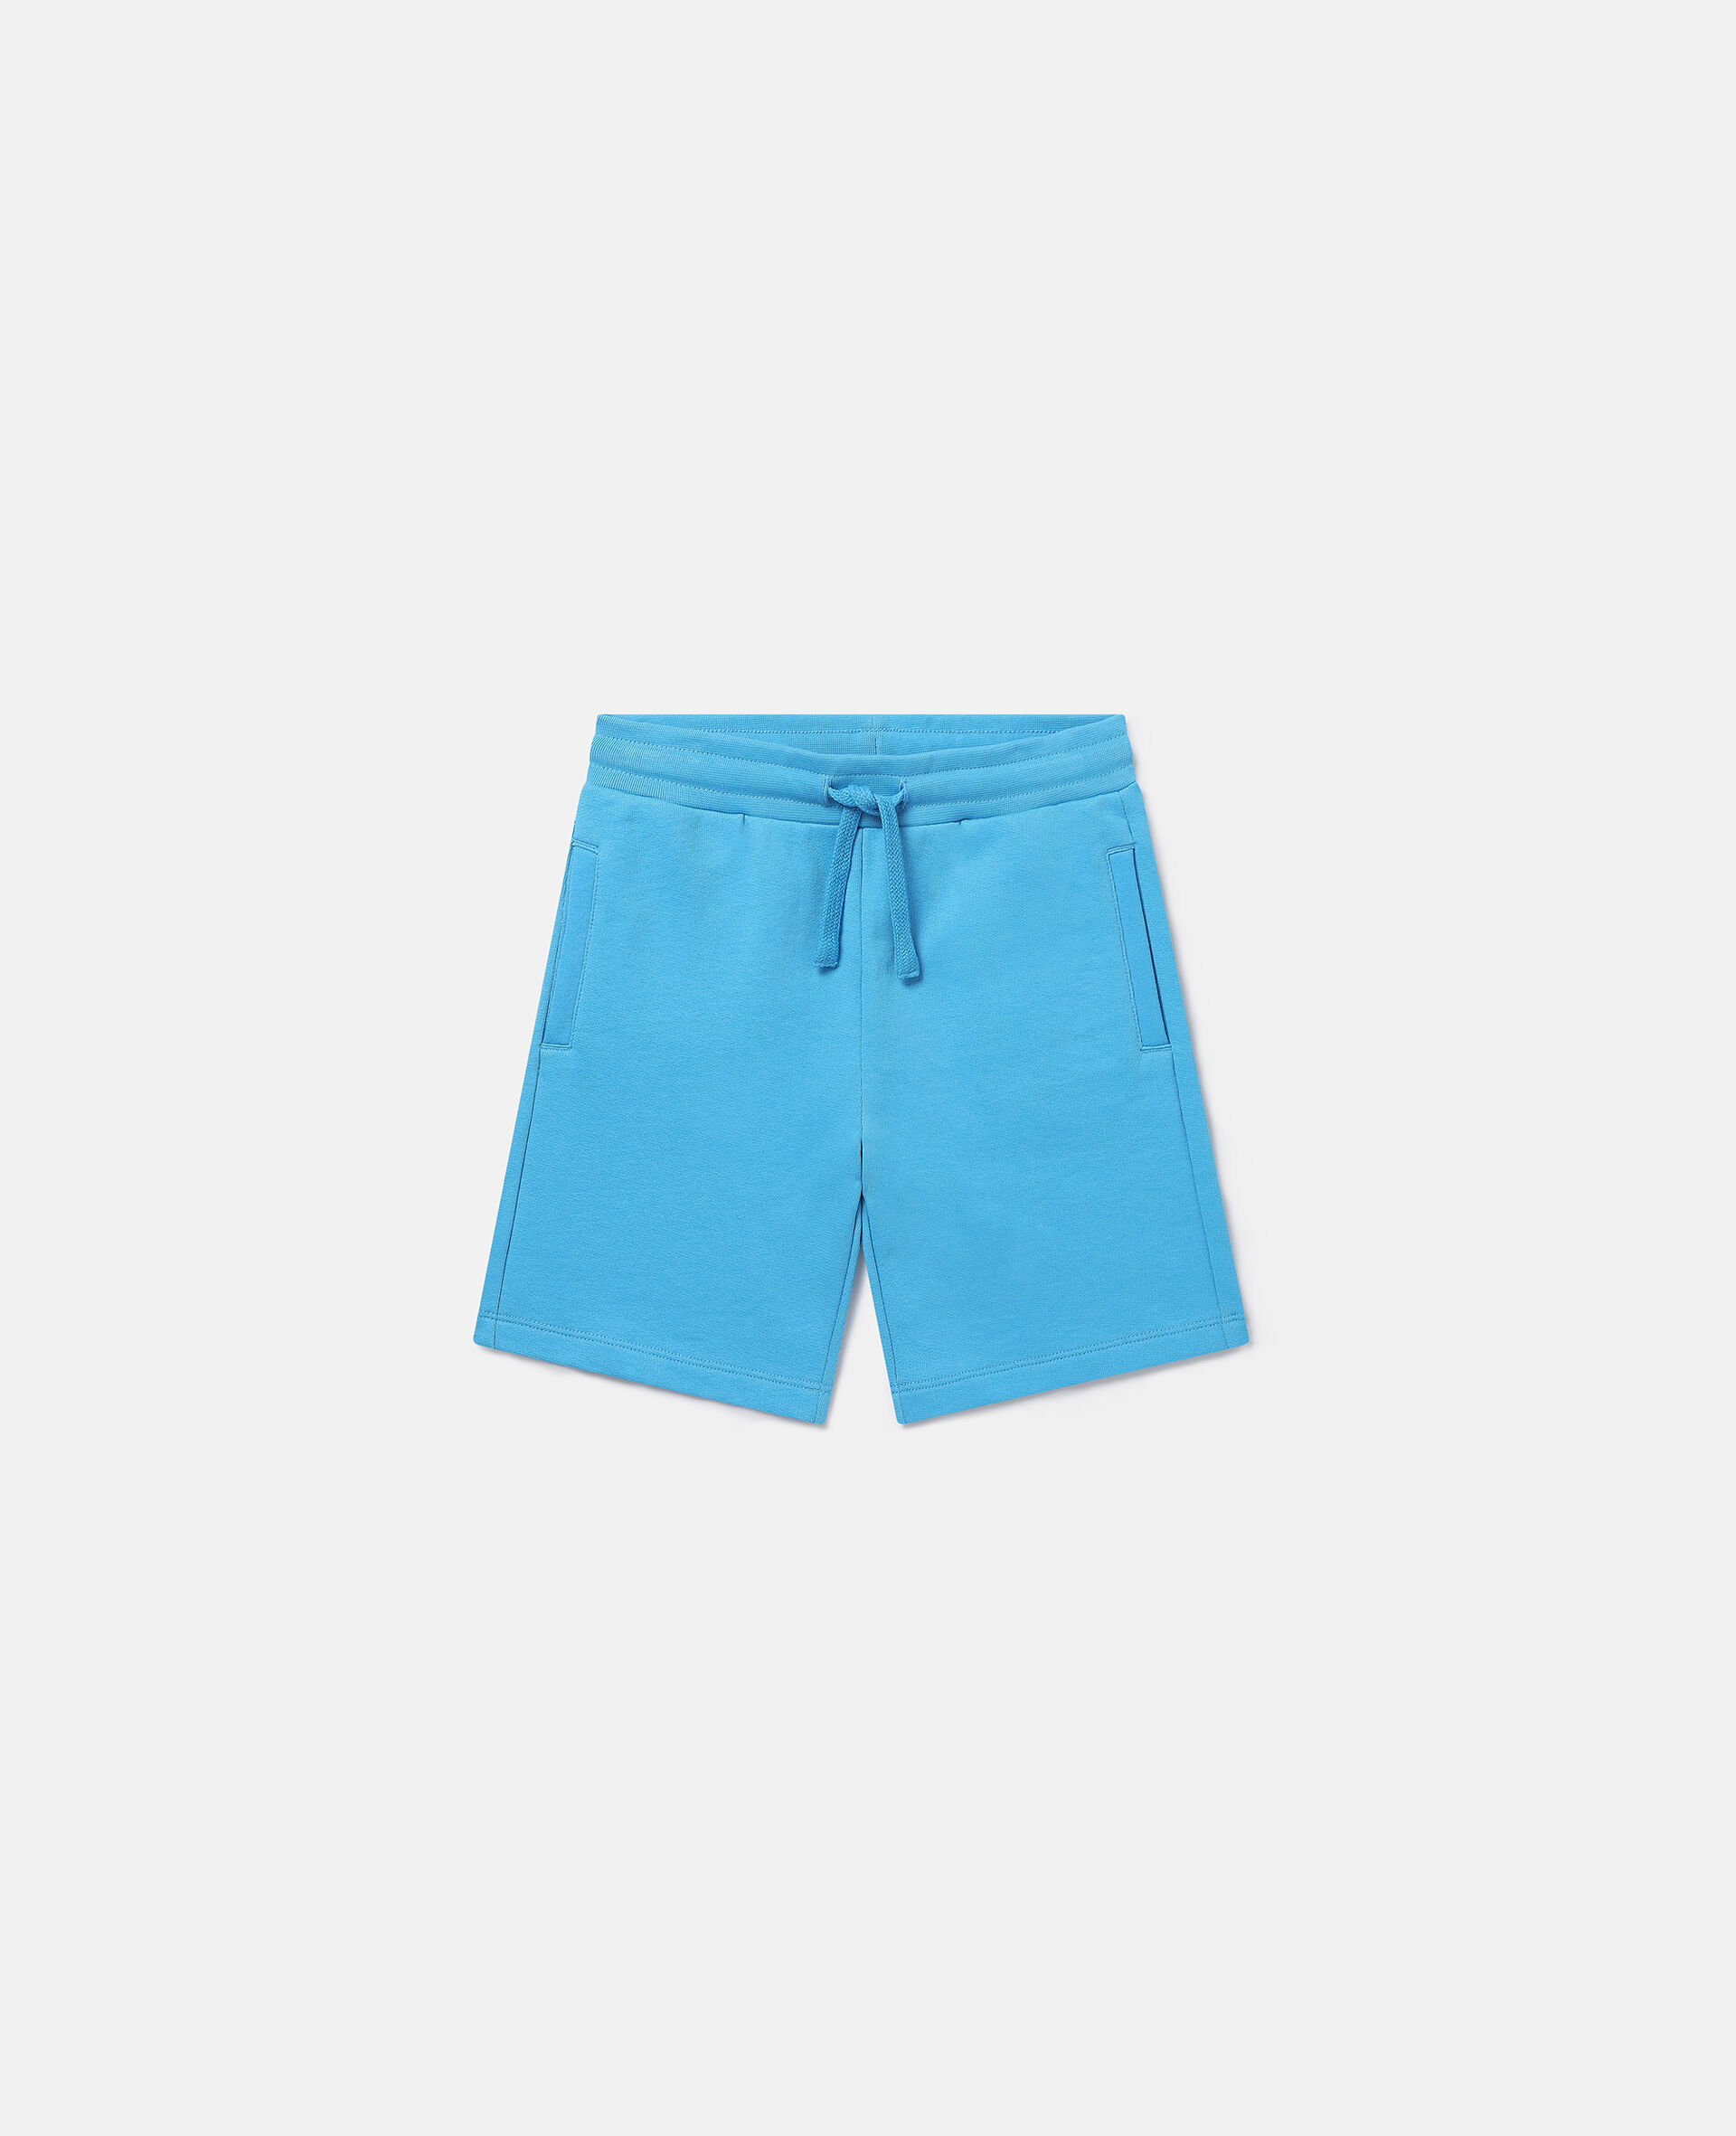 Drawstring Shorts-蓝色-large image number 0